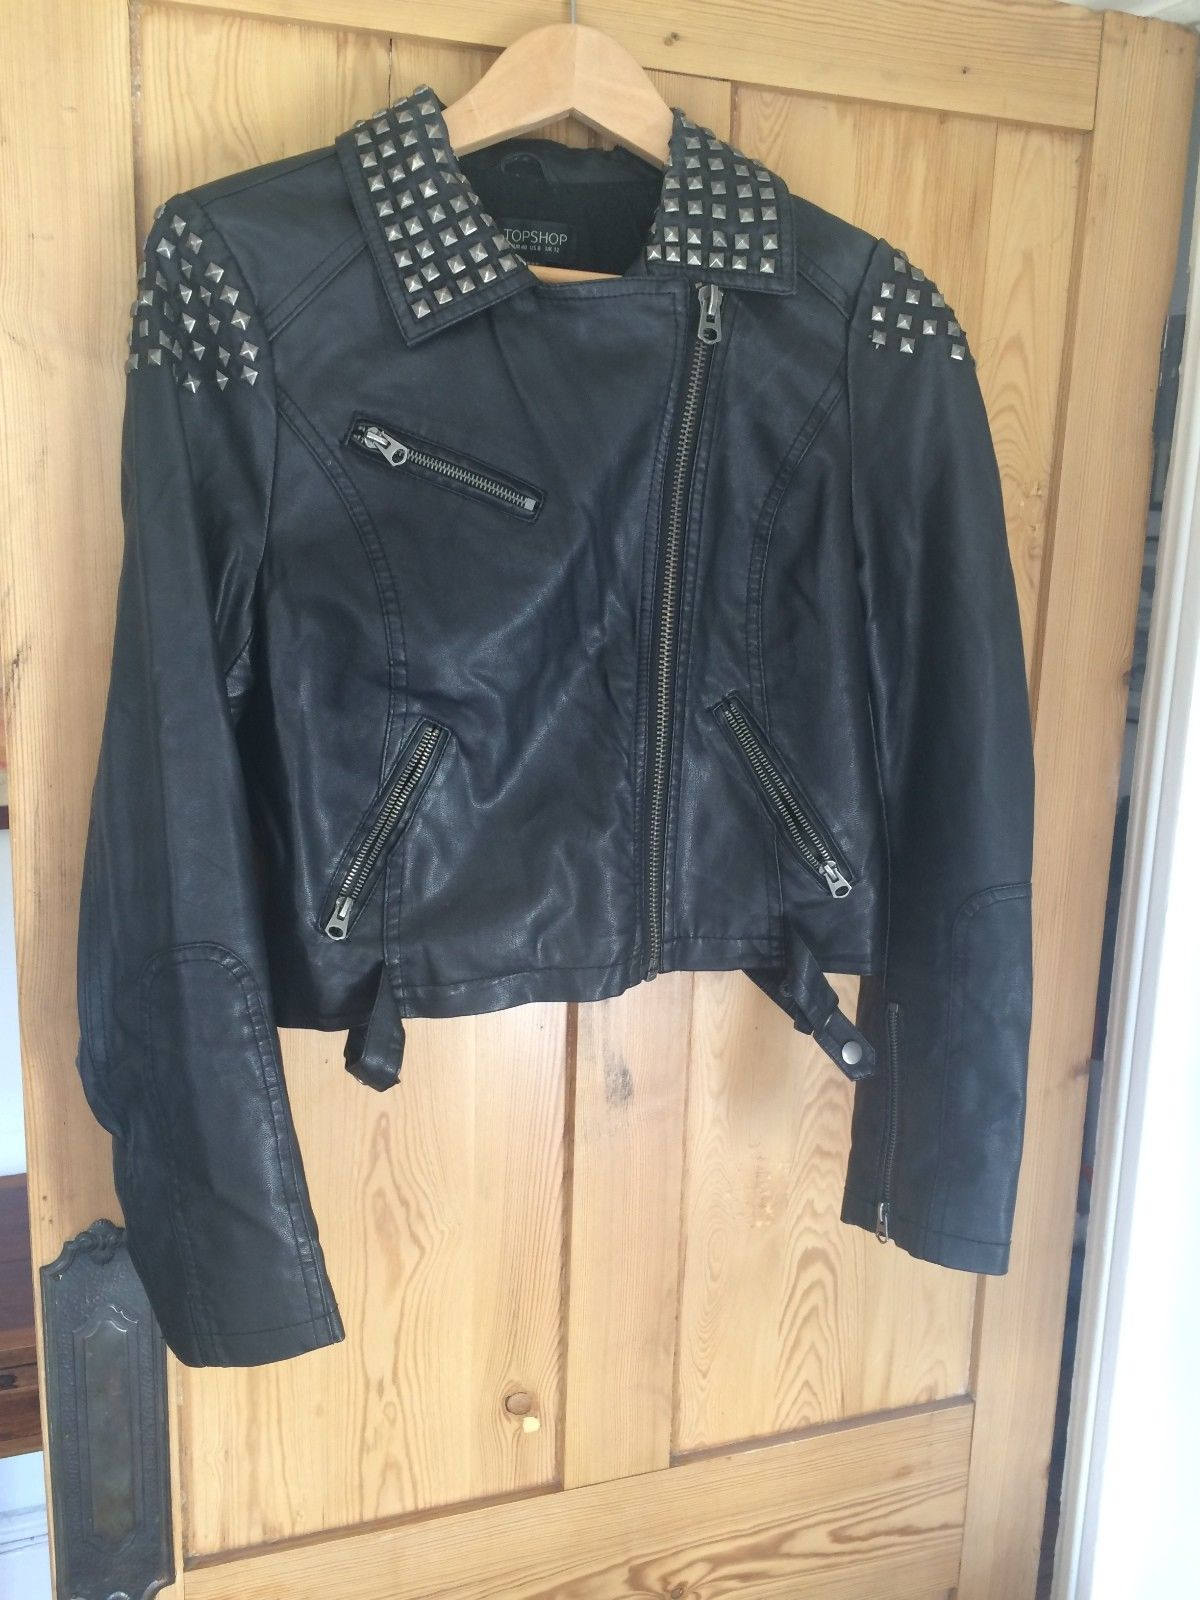 Vintage  retro punkTopshop faux leather BLACK BIKER jacket with square silve studs - size 12 Wonkey Donkey Bazaar